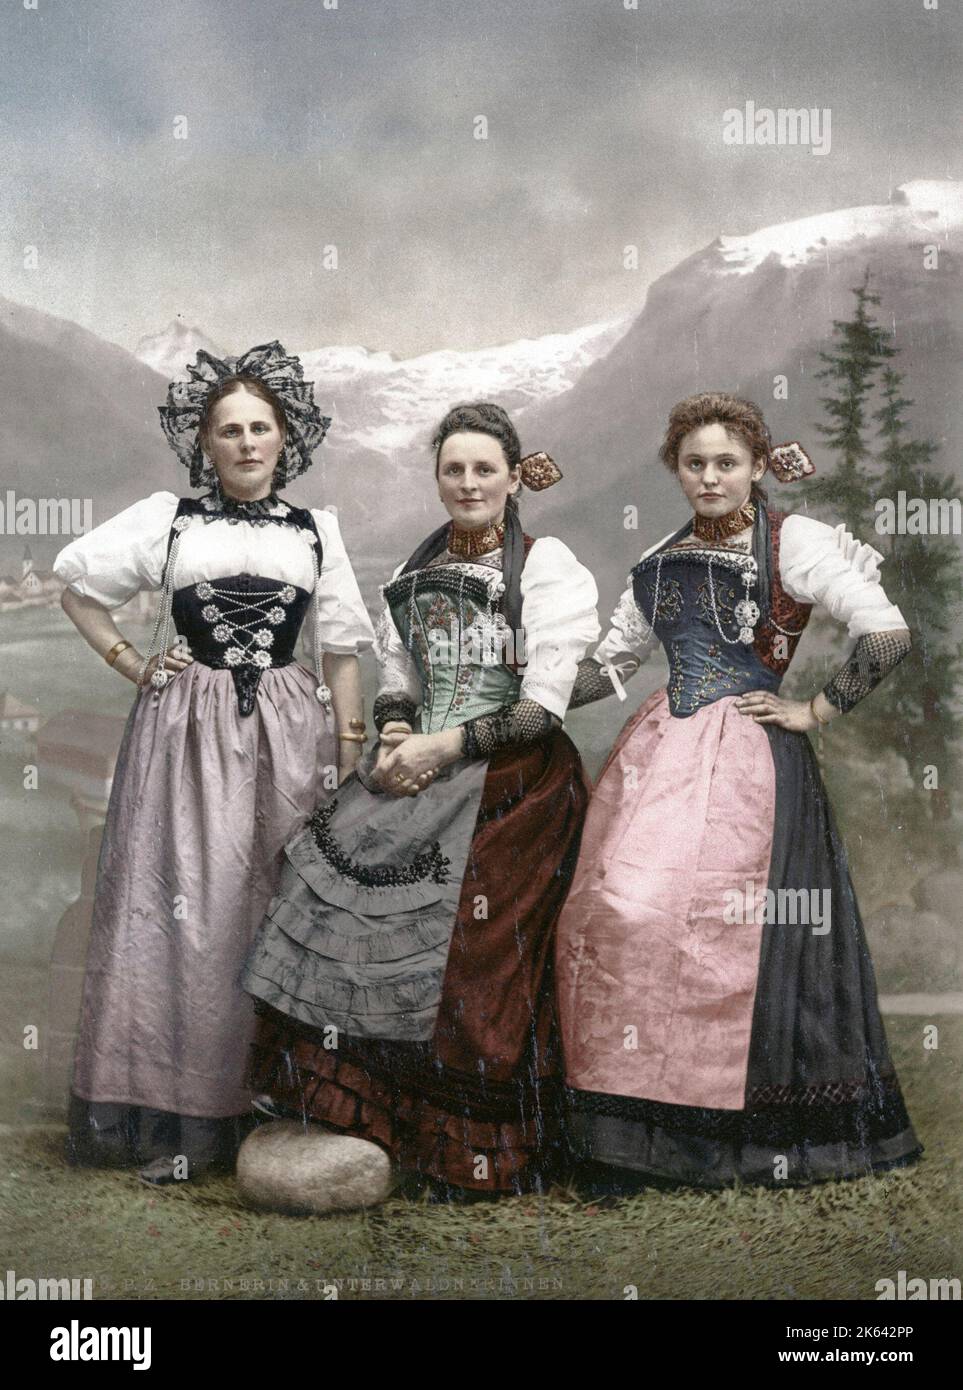 Swiss traditional dress -Fotos und -Bildmaterial in hoher Auflösung – Alamy